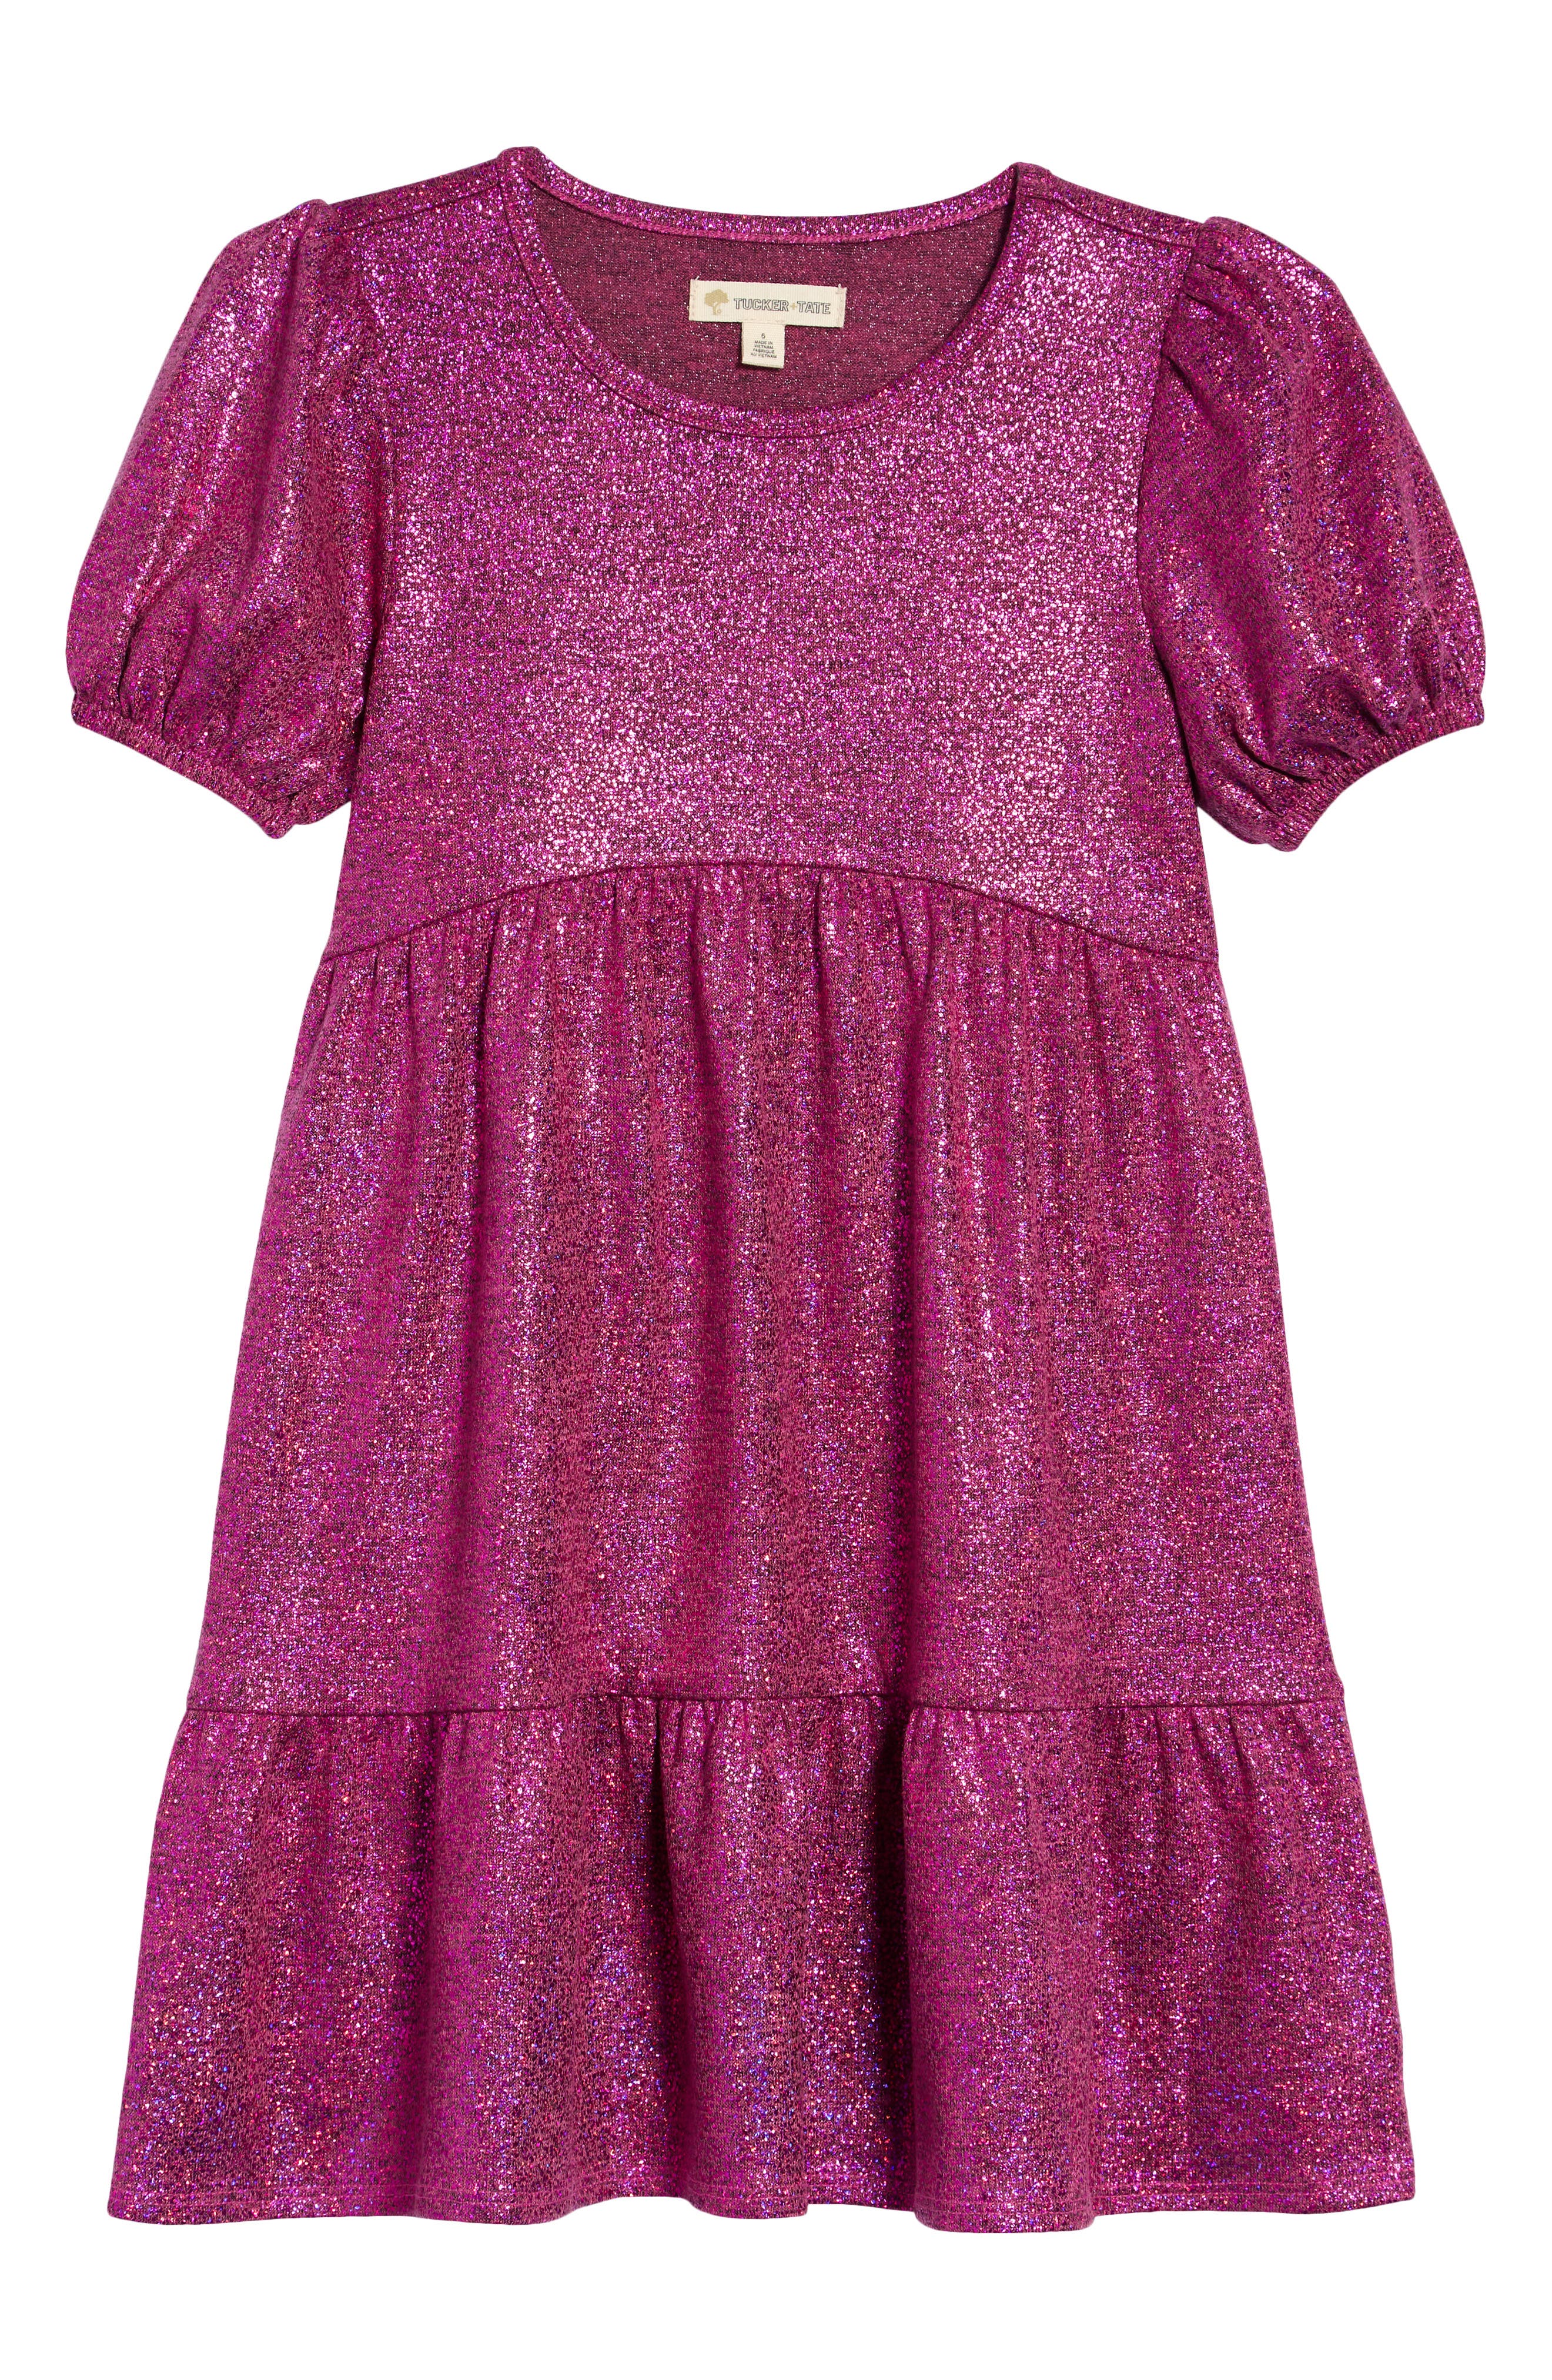 Nordstrom Clothing Dresses Puff Sleeve Dress Kids Stripe Puff Sleeve Dress in Dark Pink at Nordstrom 